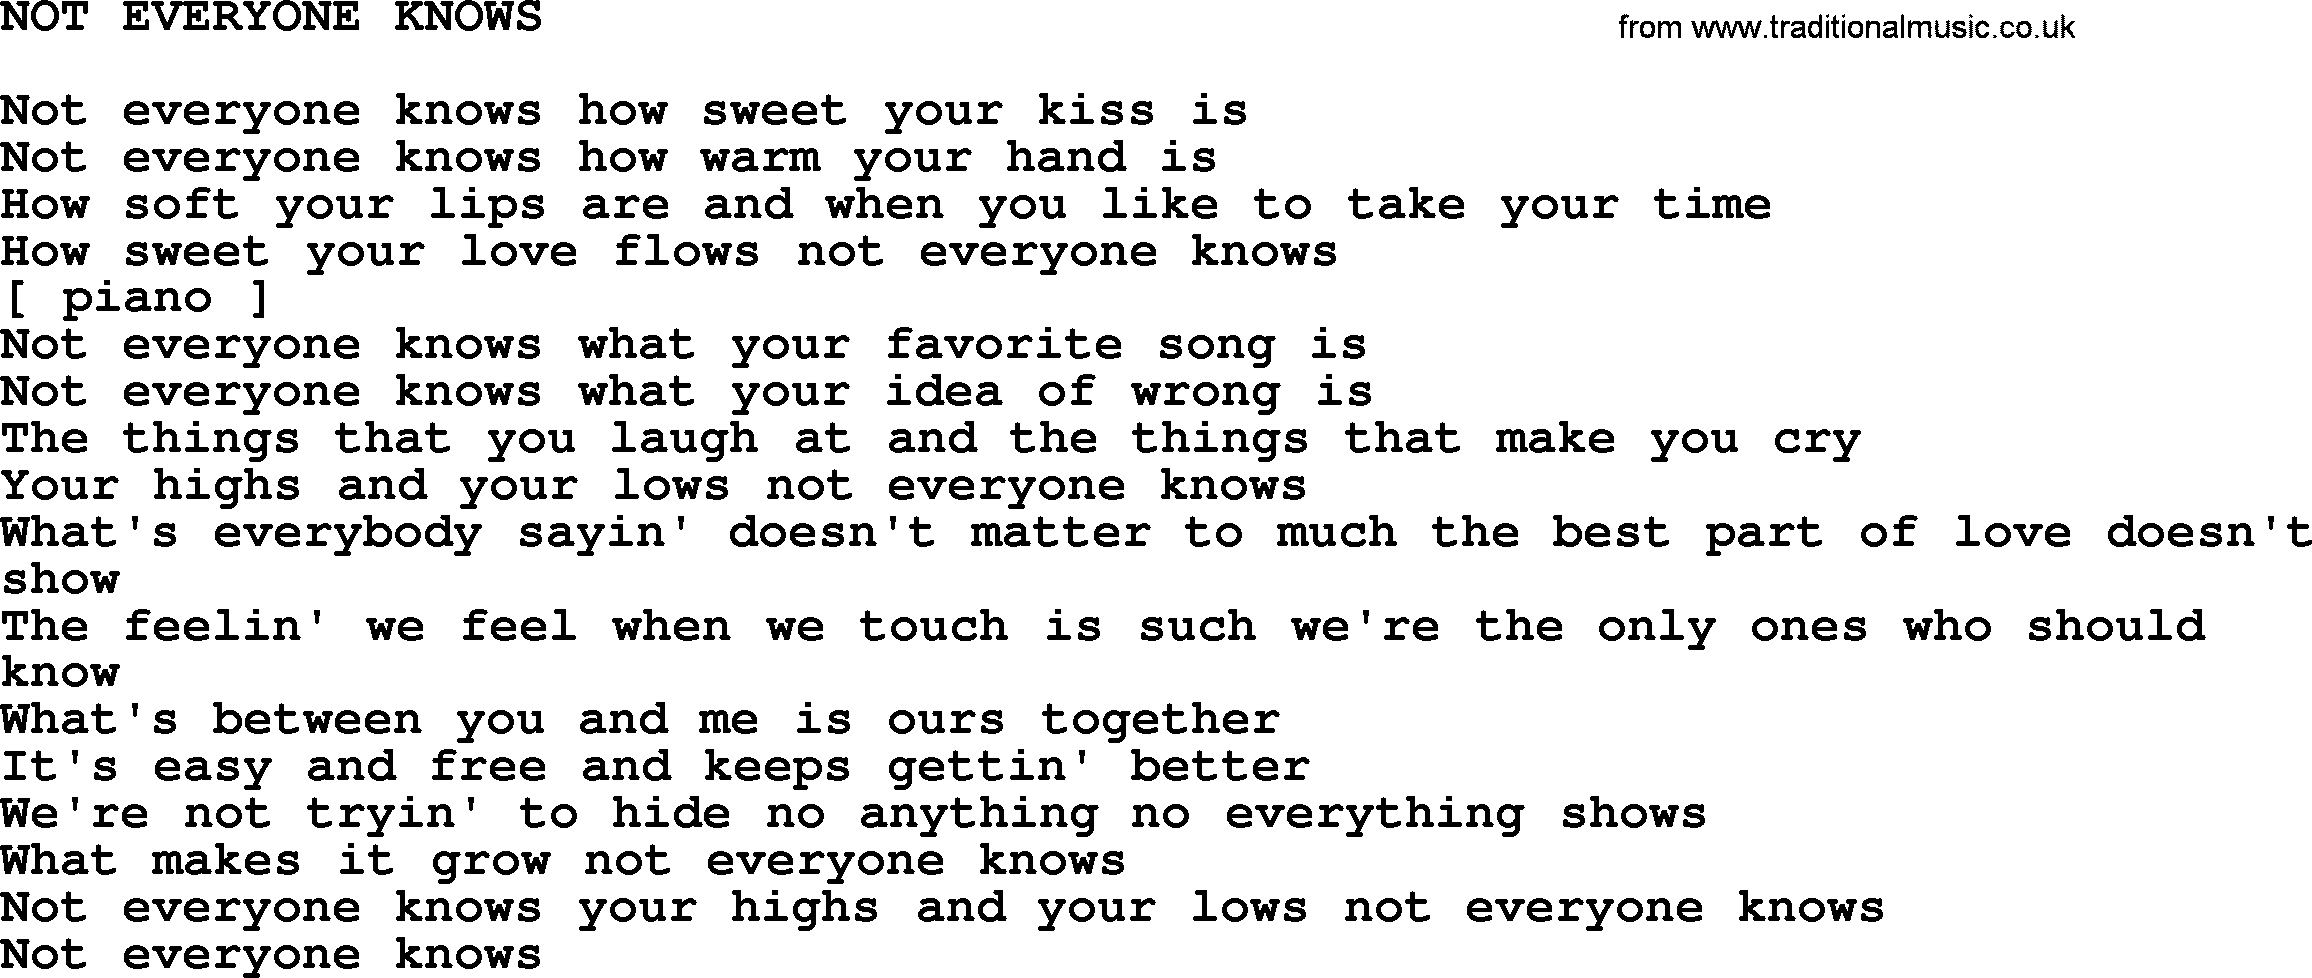 Kris Kristofferson song: Not Everyone Knows lyrics